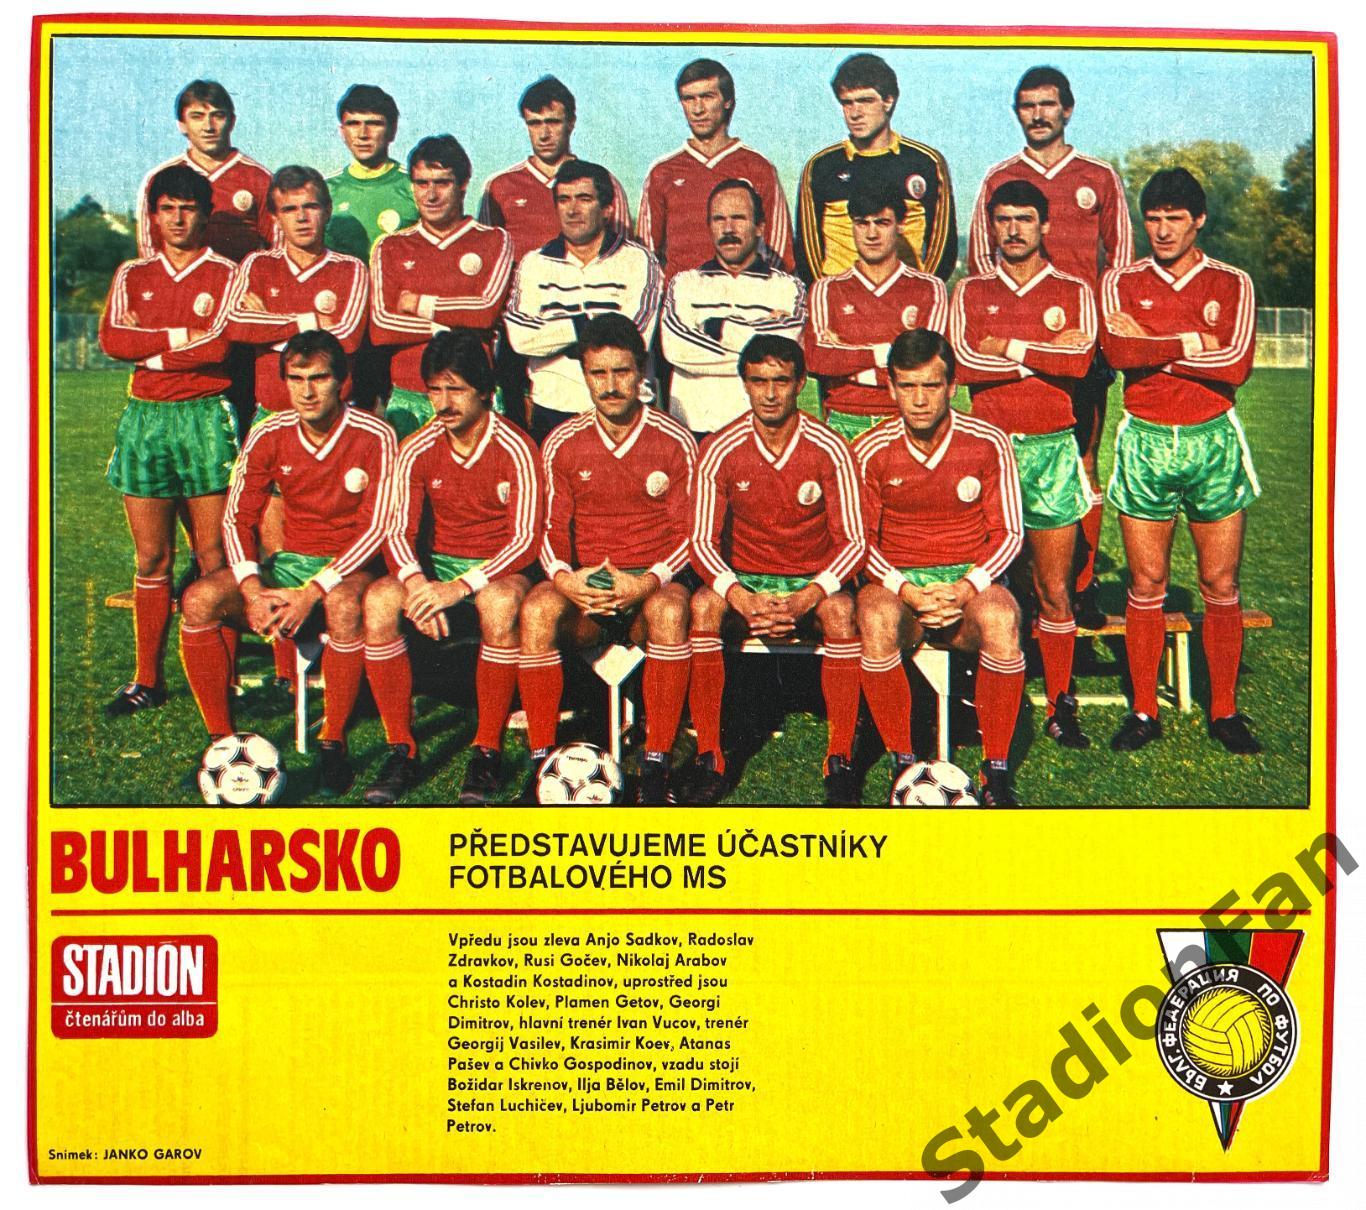 Постер из журнала Стадион (Stadion) - Bulharsko, 1986